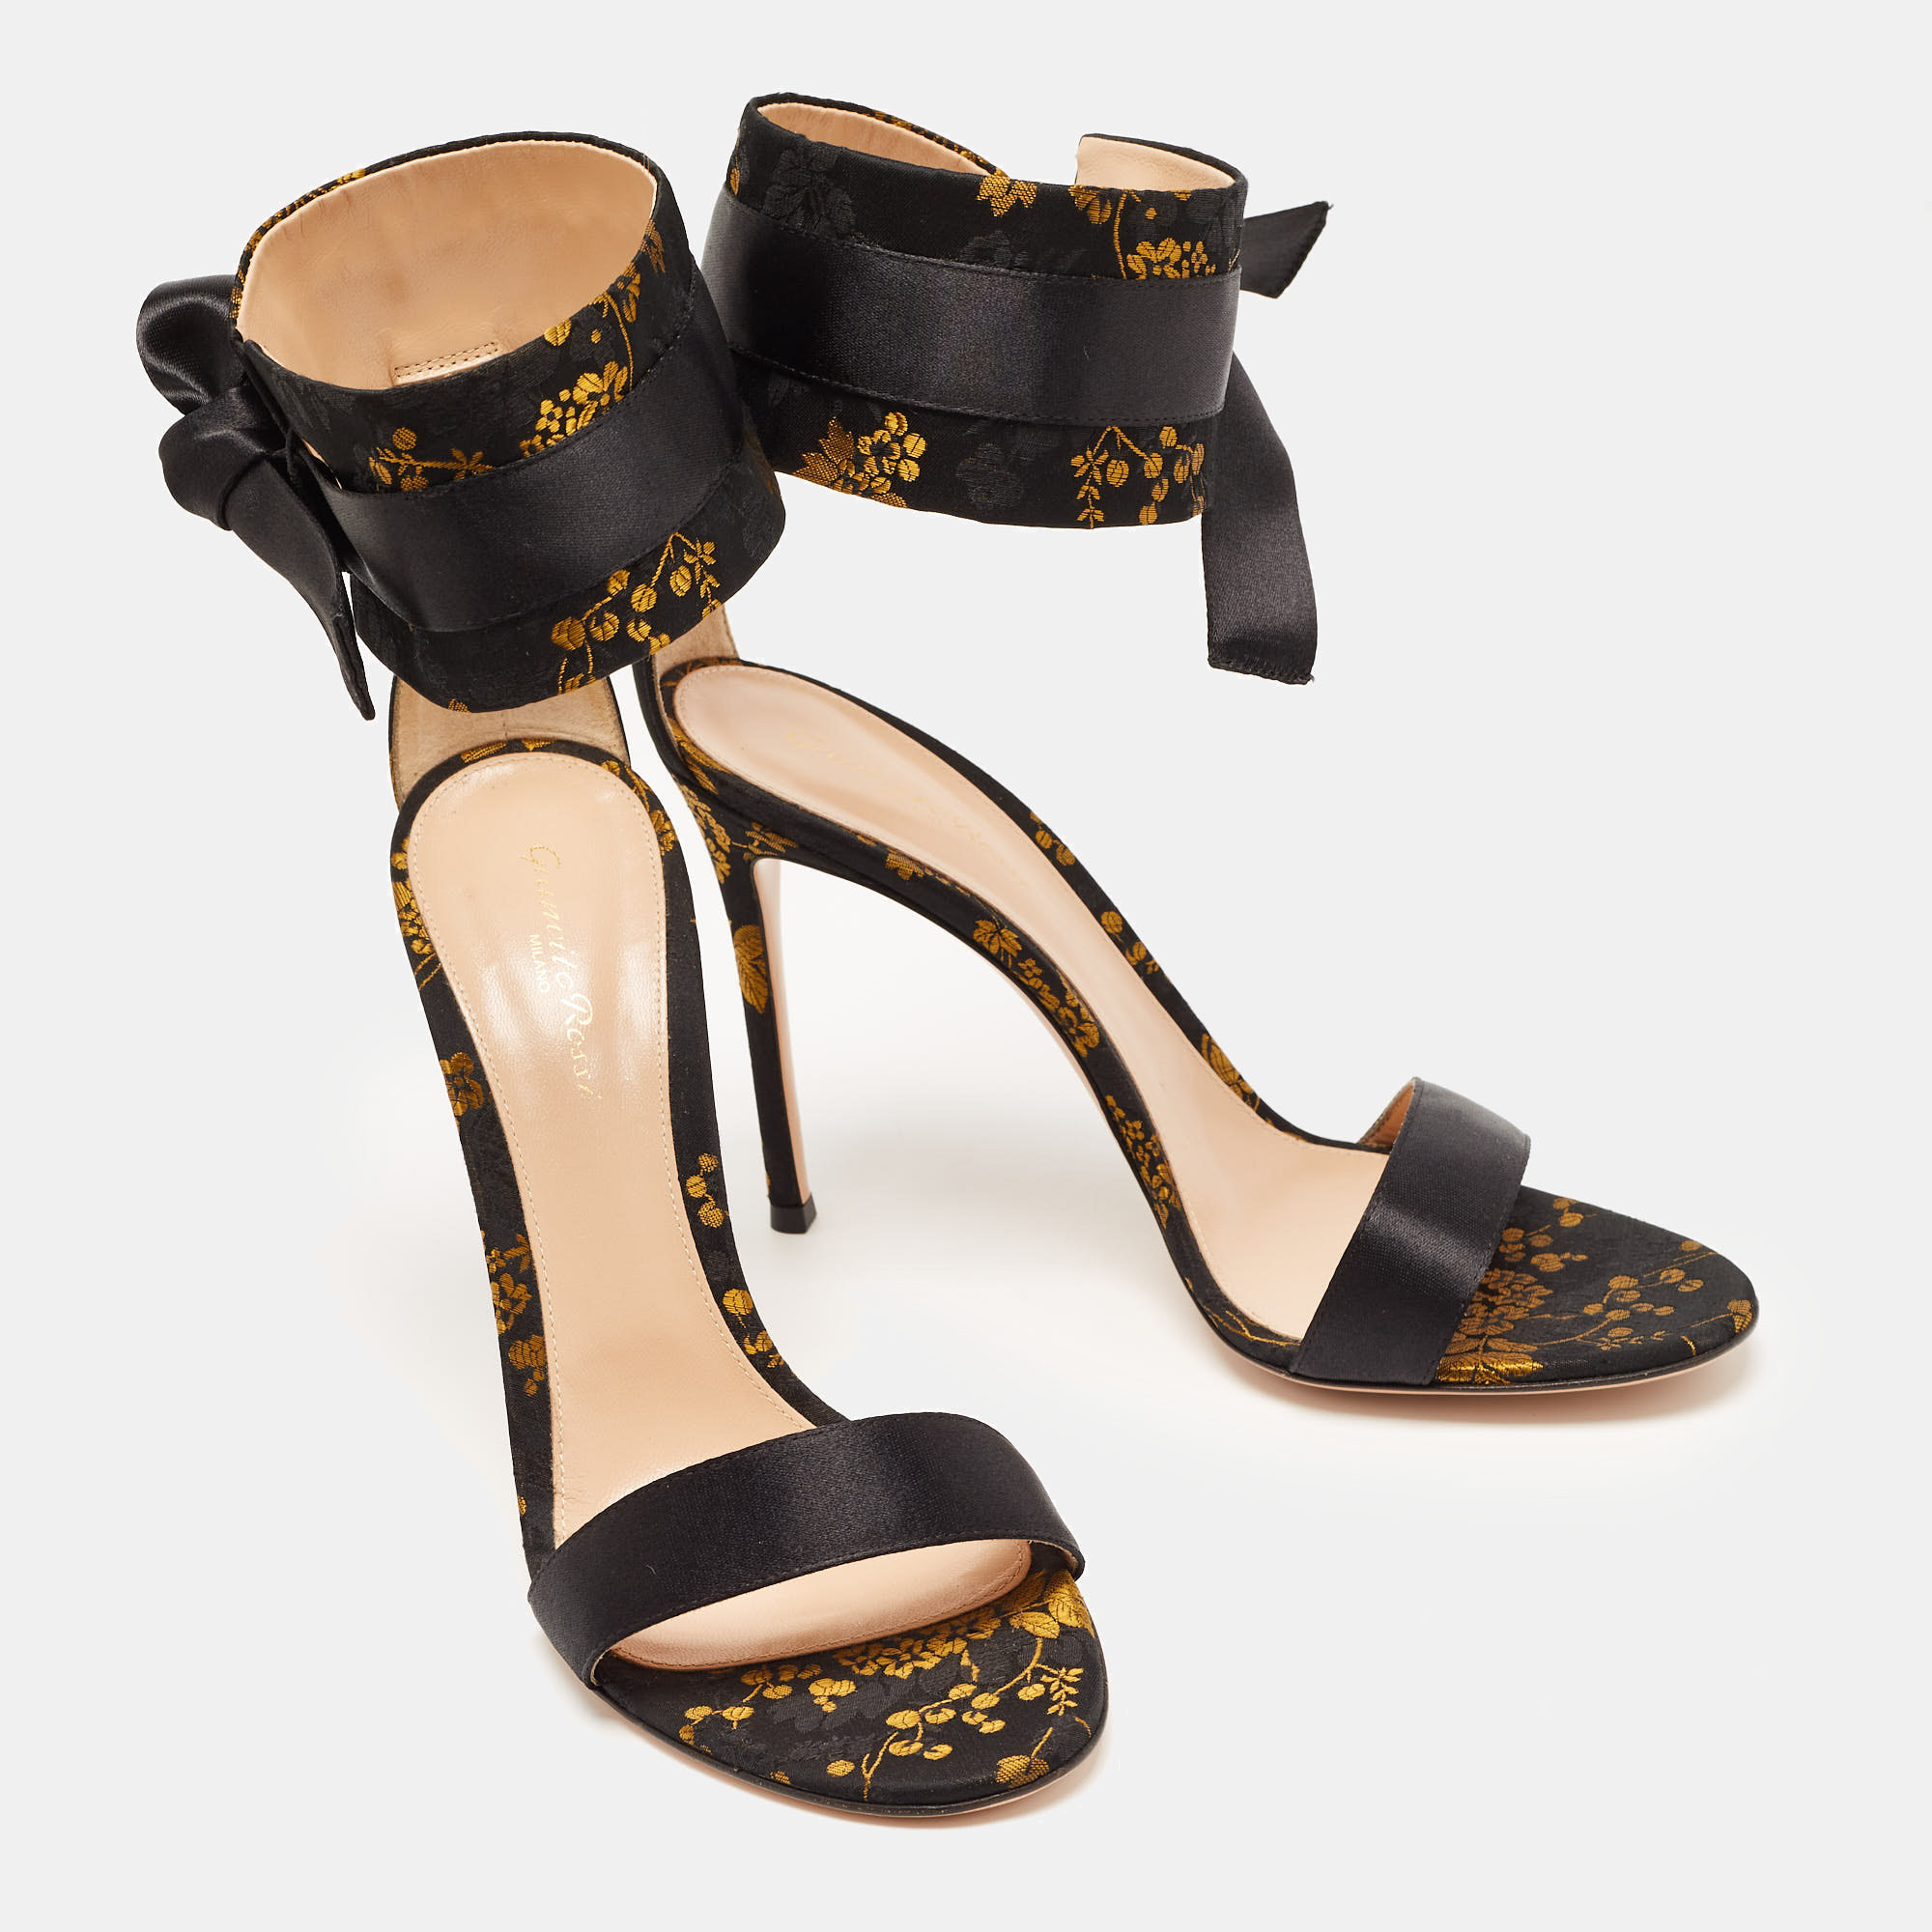 Gianvito Rossi Black/Yellow Jacquard Fabric Ankle Strap Open Toe Sandals Size 42